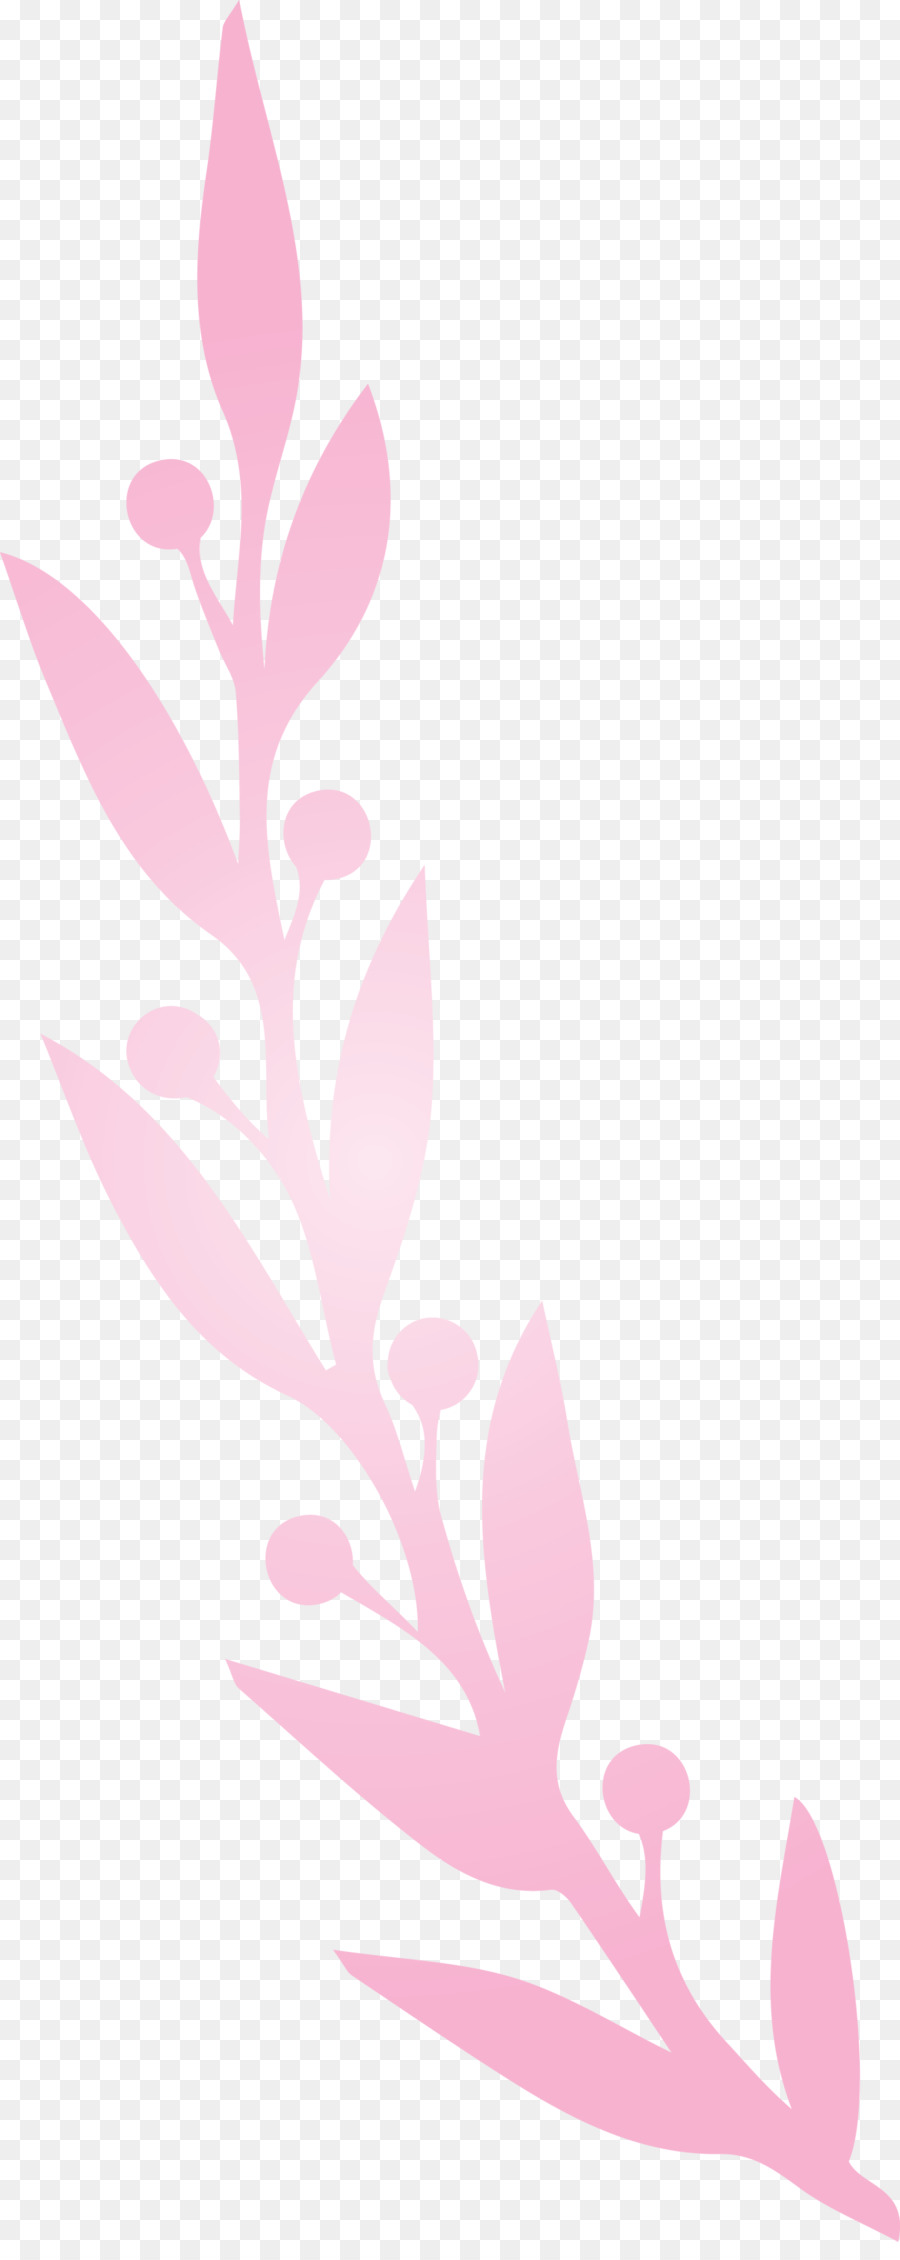 plant stem petal leaf twig pink m